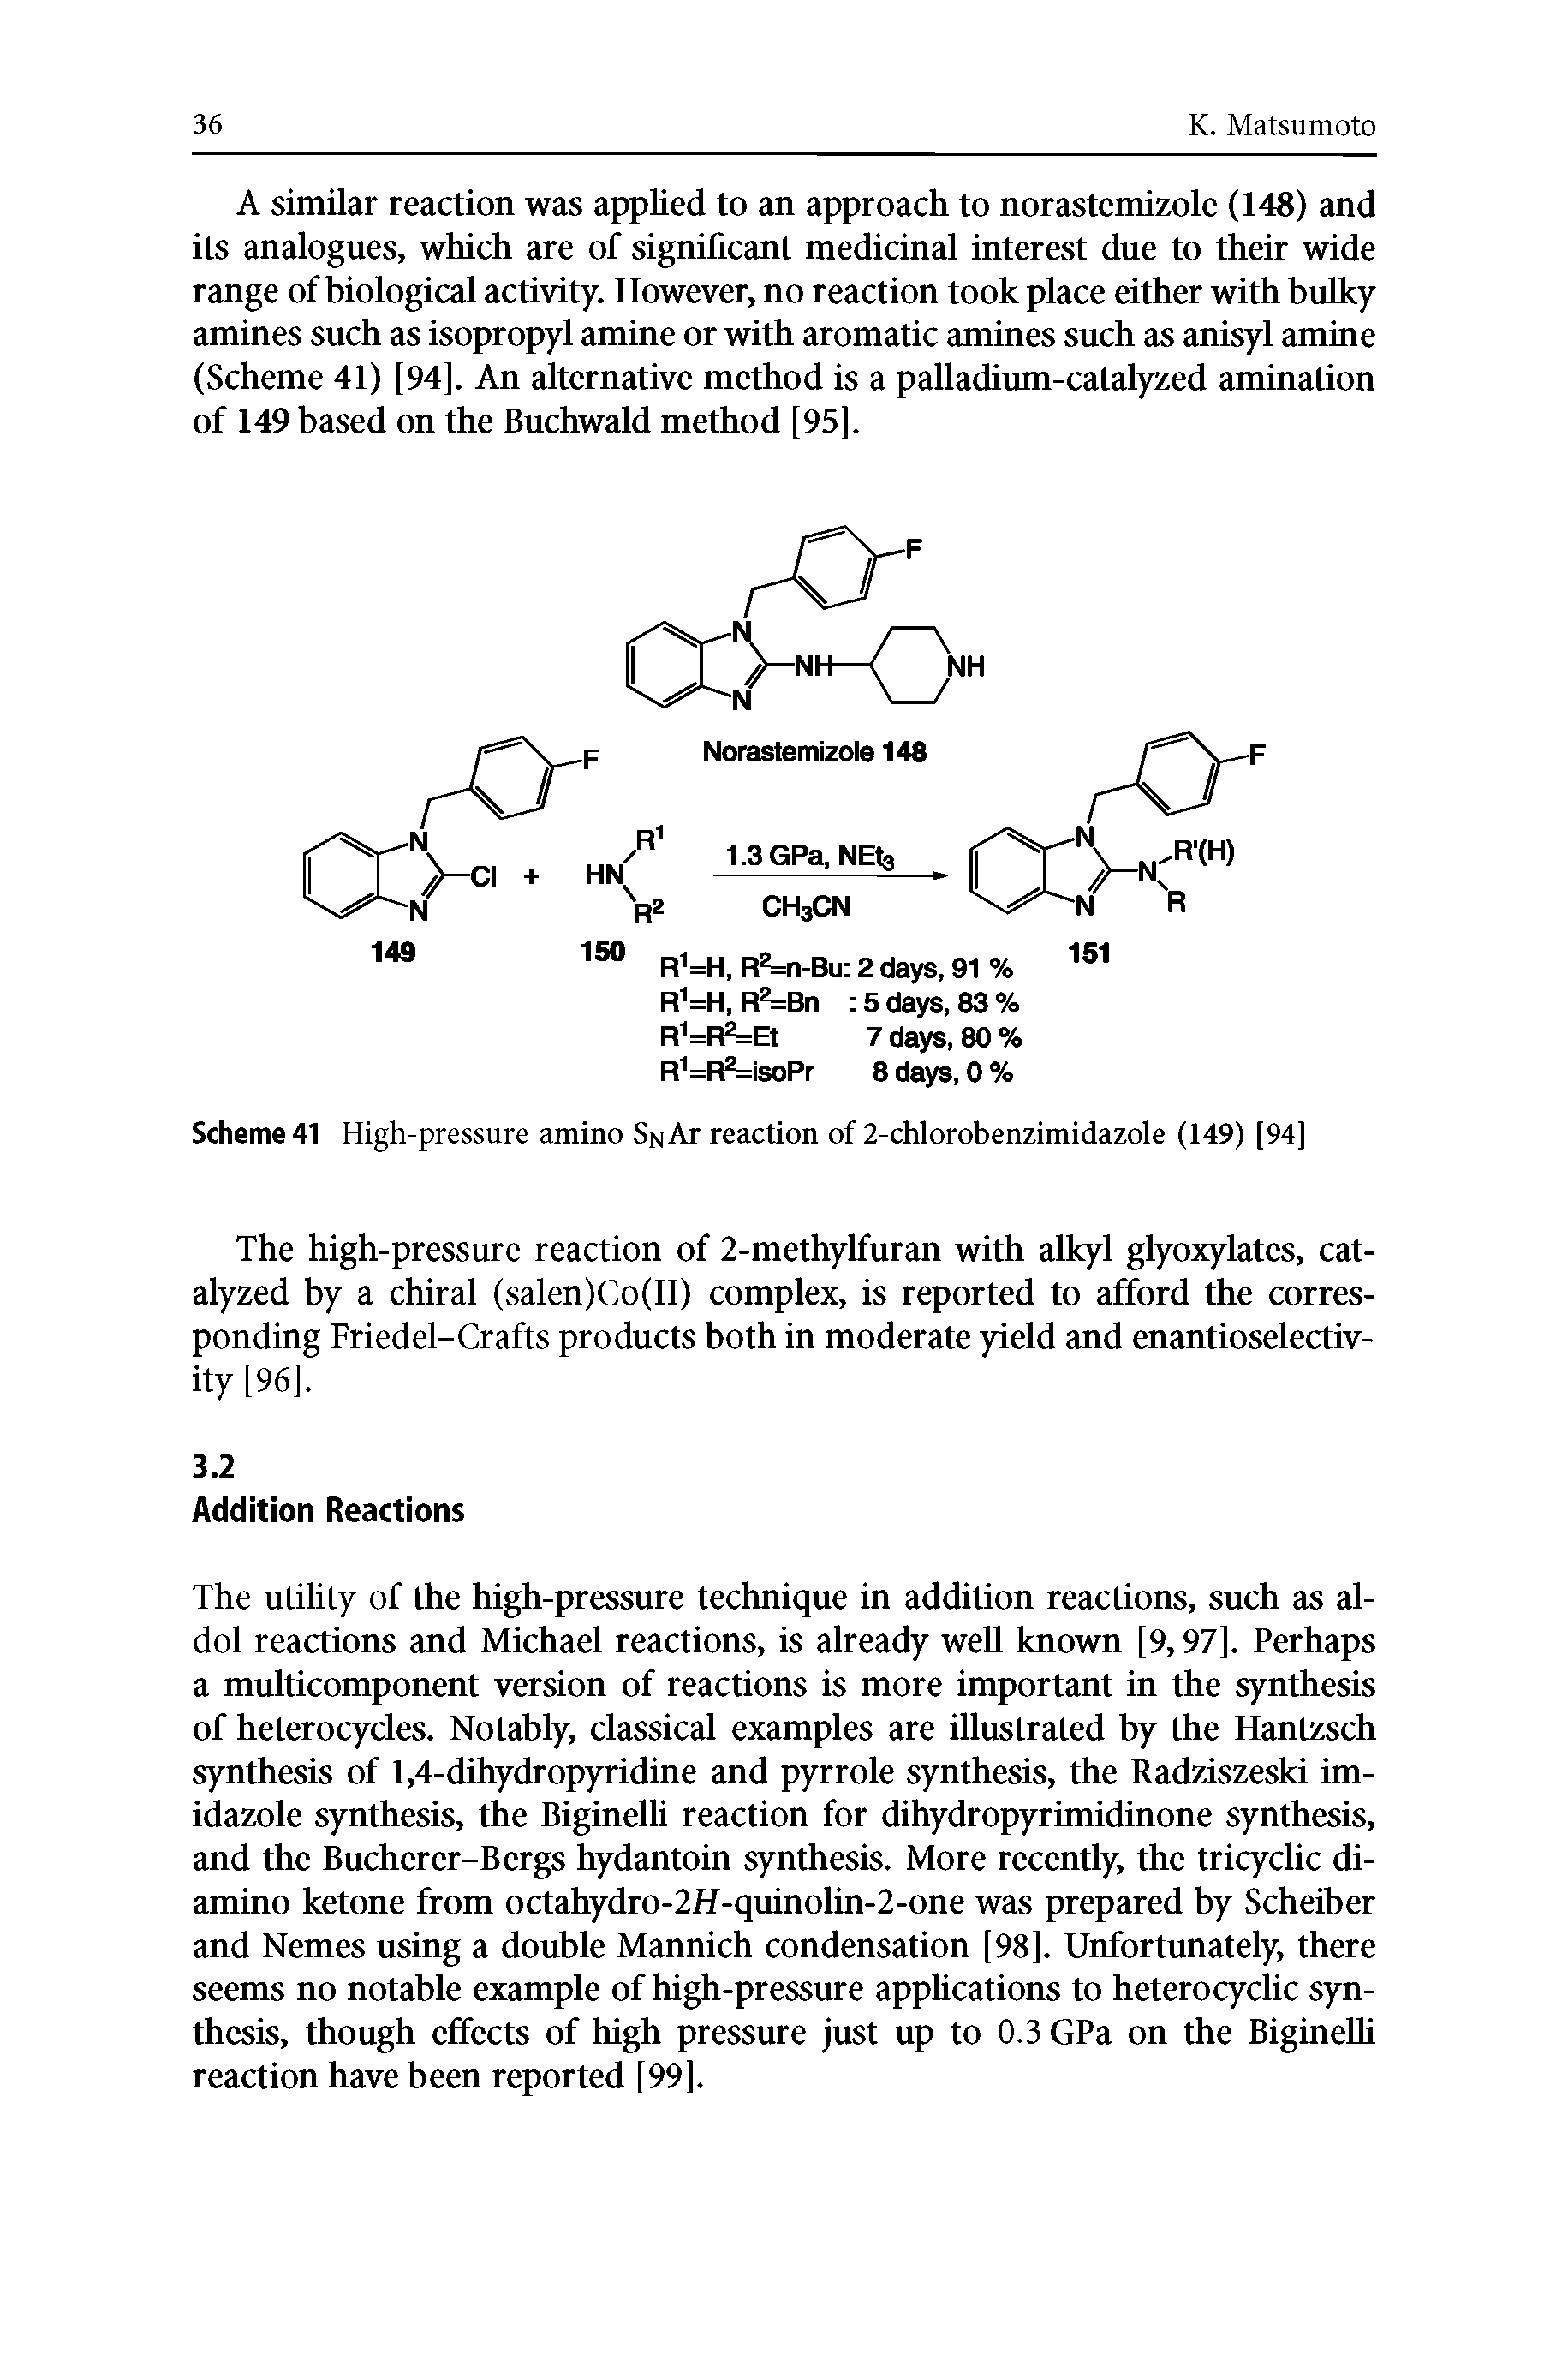 Scheme 41 High-pressure amino SnAt reaction of 2-chlorobenzimidazole (149) [94]...